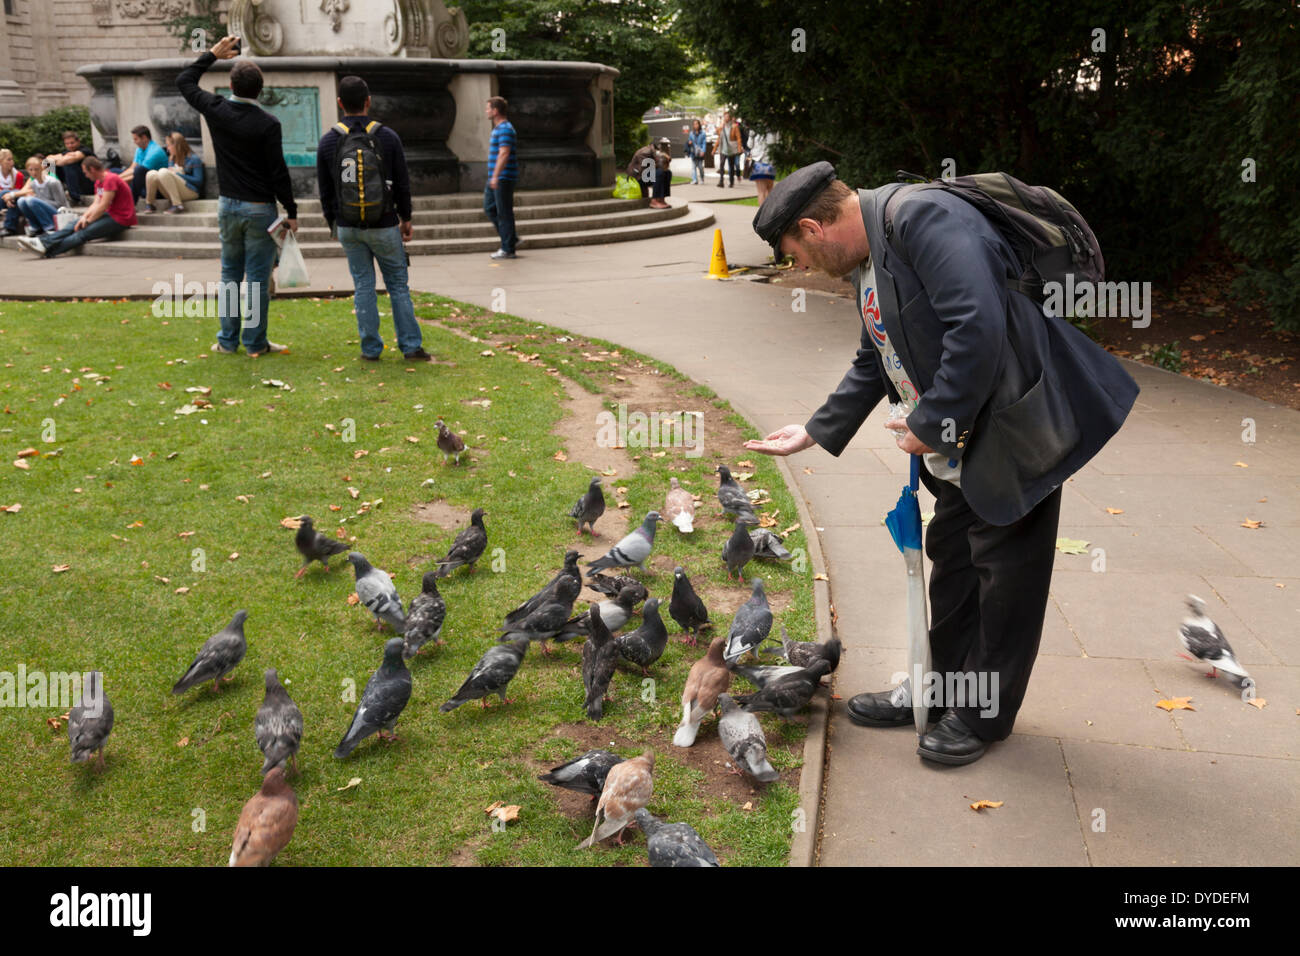 Man feeding pigeons in St Paul's Churchyard in London. Stock Photo